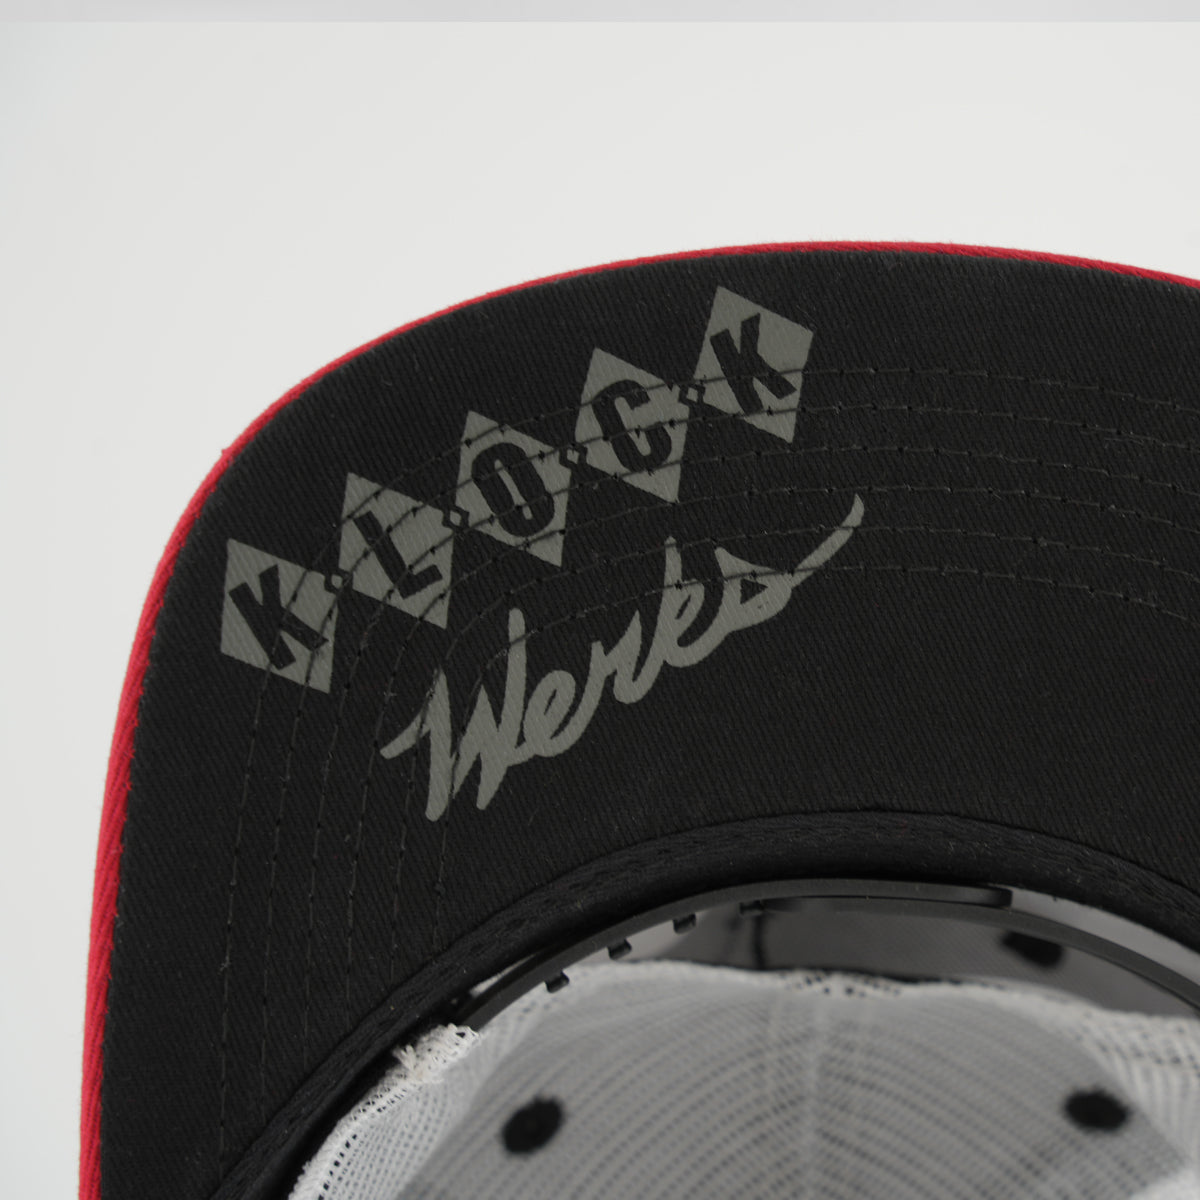 Klock Werks Fist Bump Stripe Trucker Hat for Youth with Klock Werks imprinted on the brim